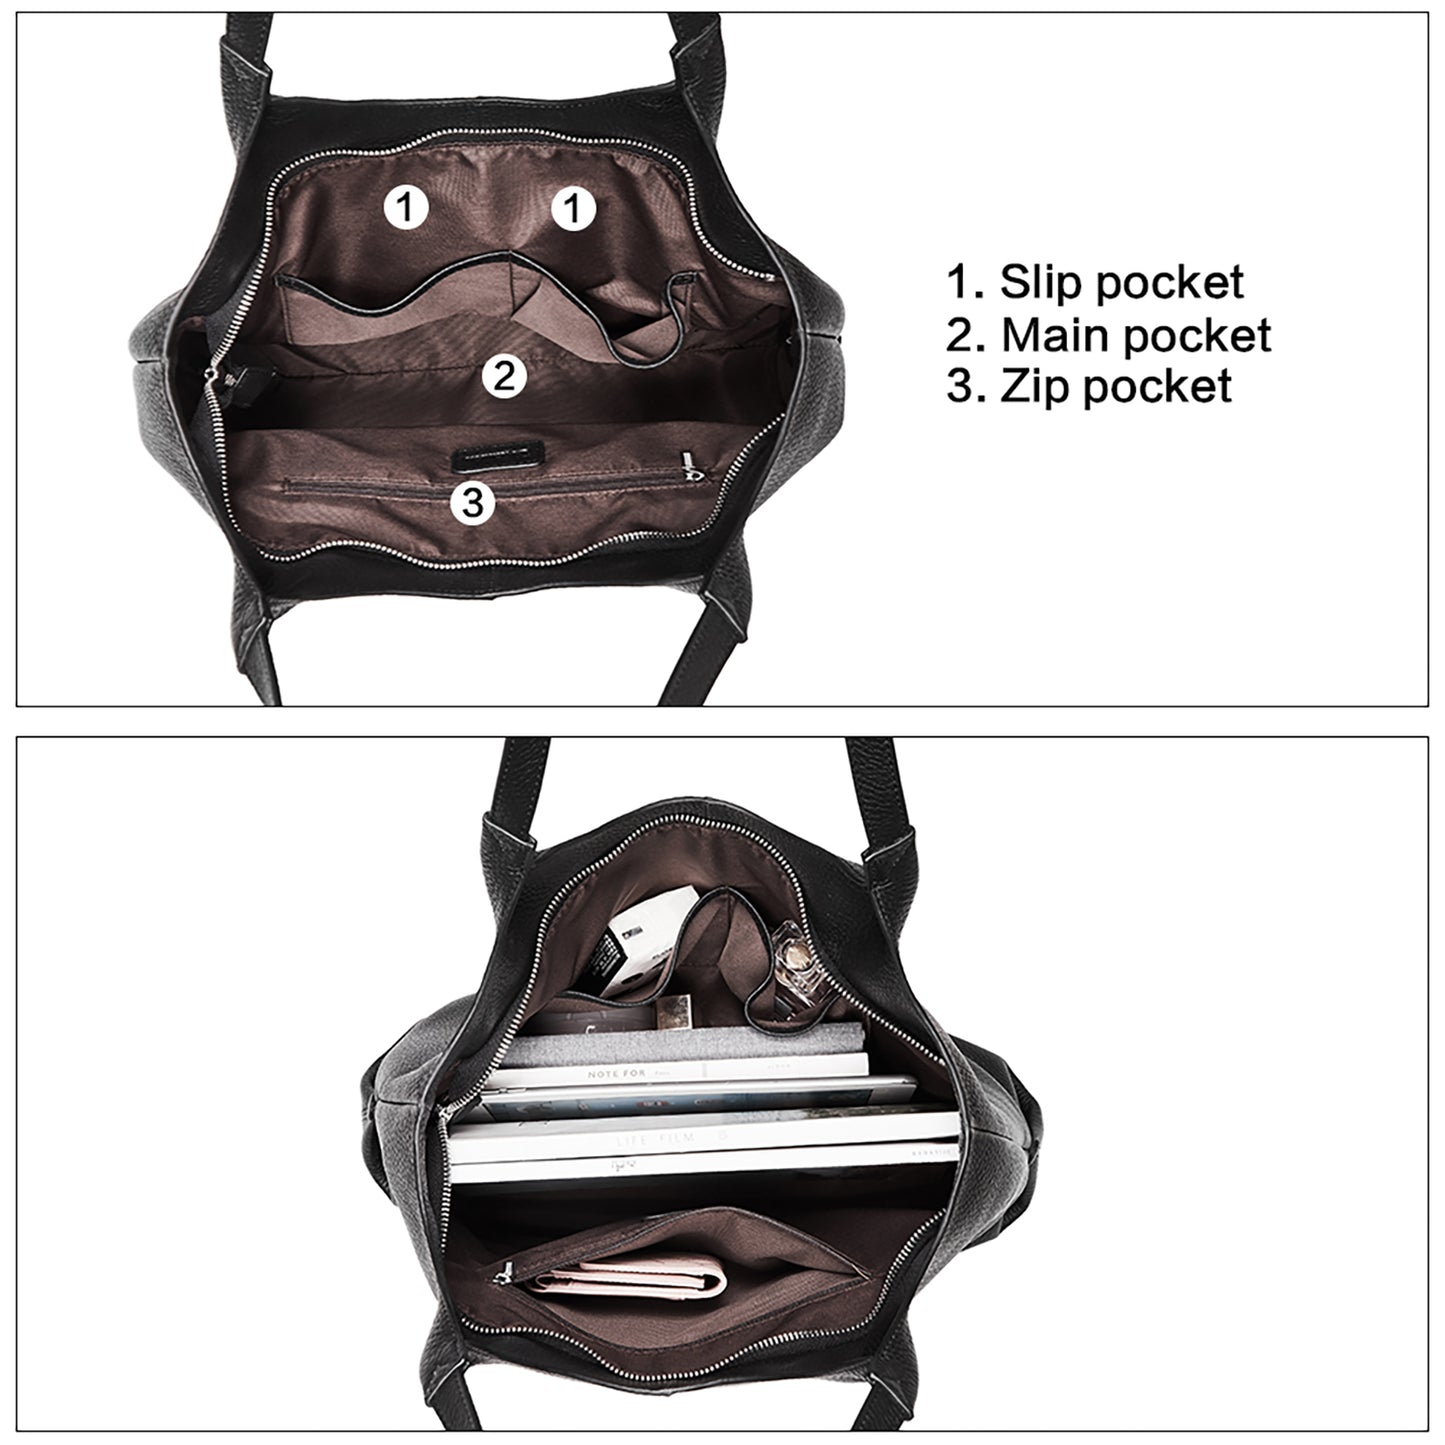 BOSTANTEN Women Handbags Designer Shoulder Tote Bag Soft Genuine Leather Top-handle Purse